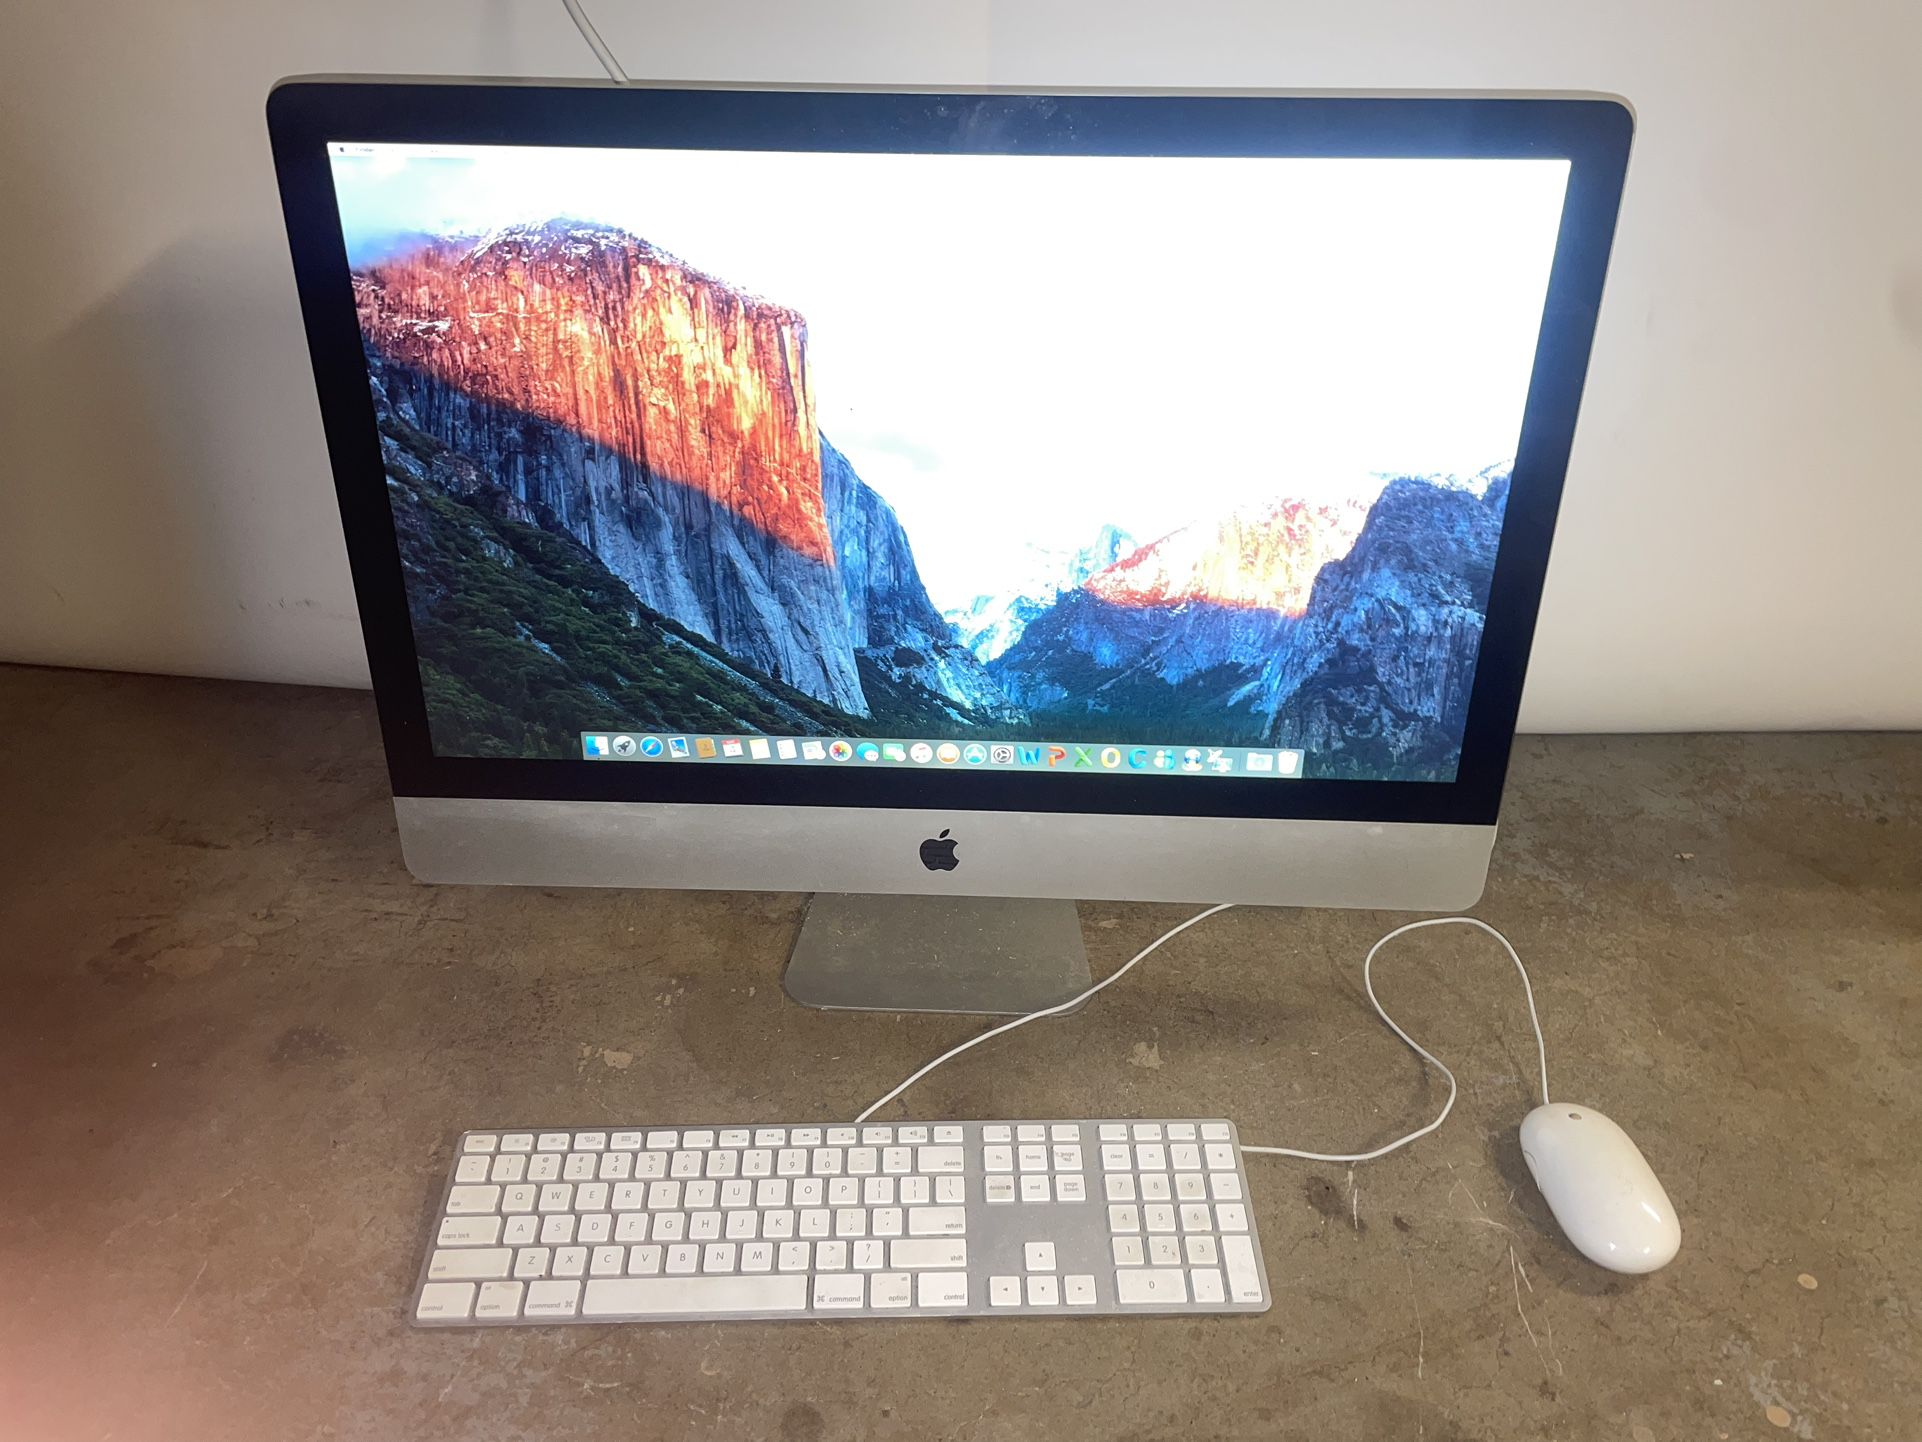 Apple iMac 27" (Mid 2011). Core i5 @ 2.70GHz. 8GB RAM. 1TB HDD. El Capitan. Office 2011